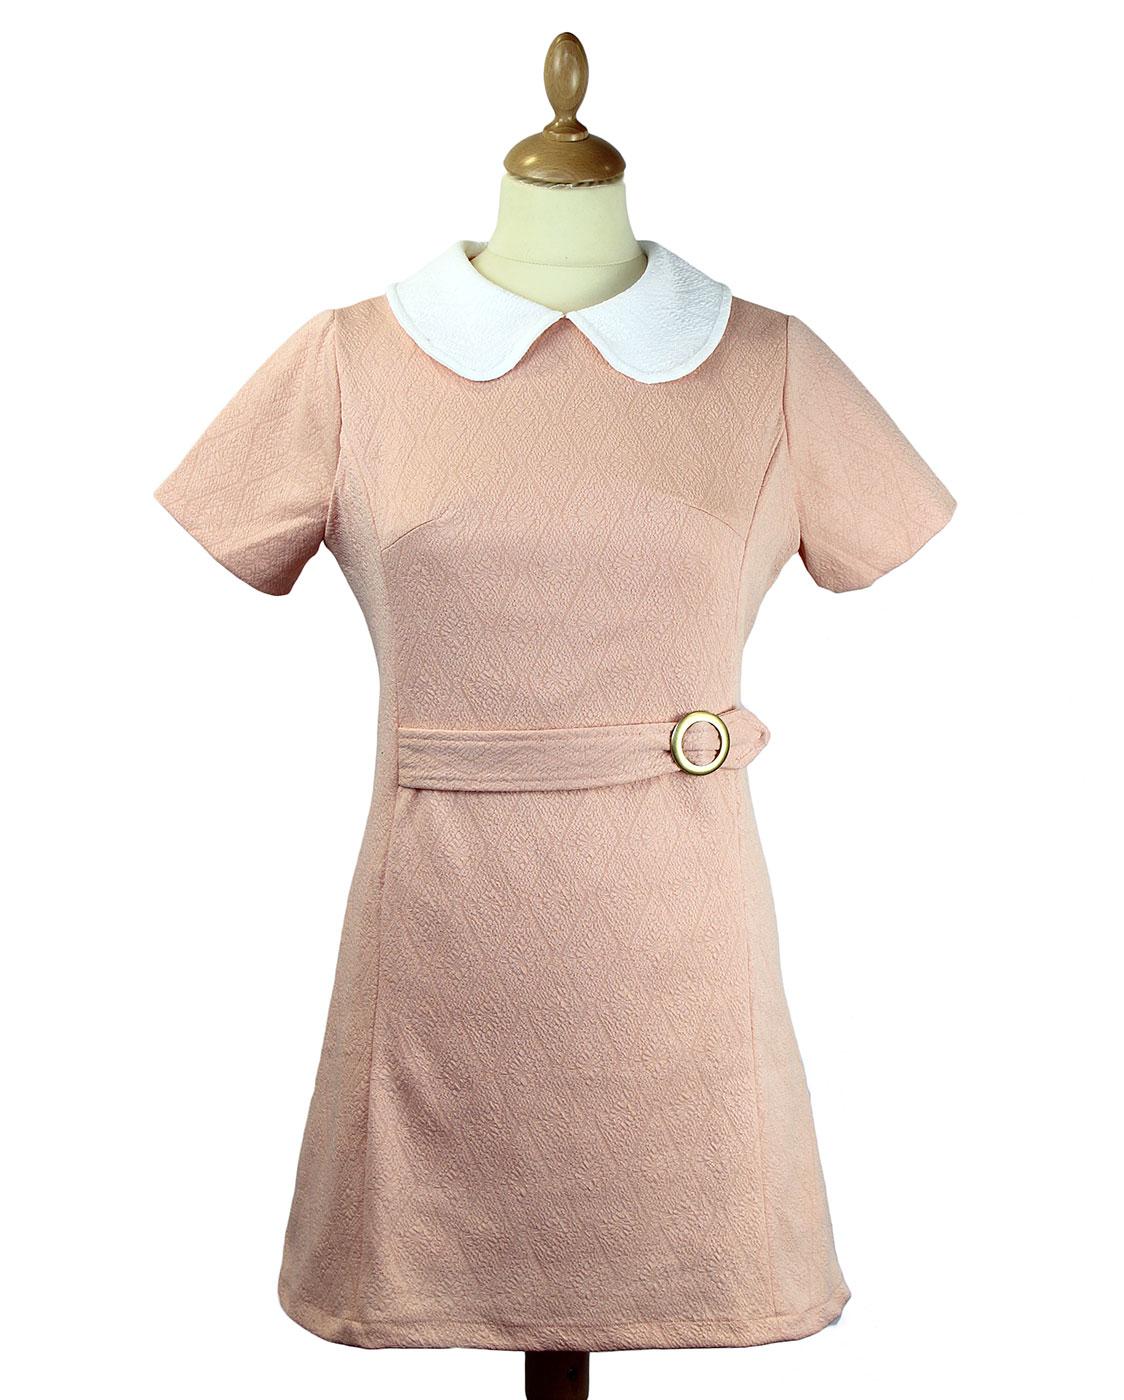 Sally Retro 1960s Mod Texture Dress in Blush Peach